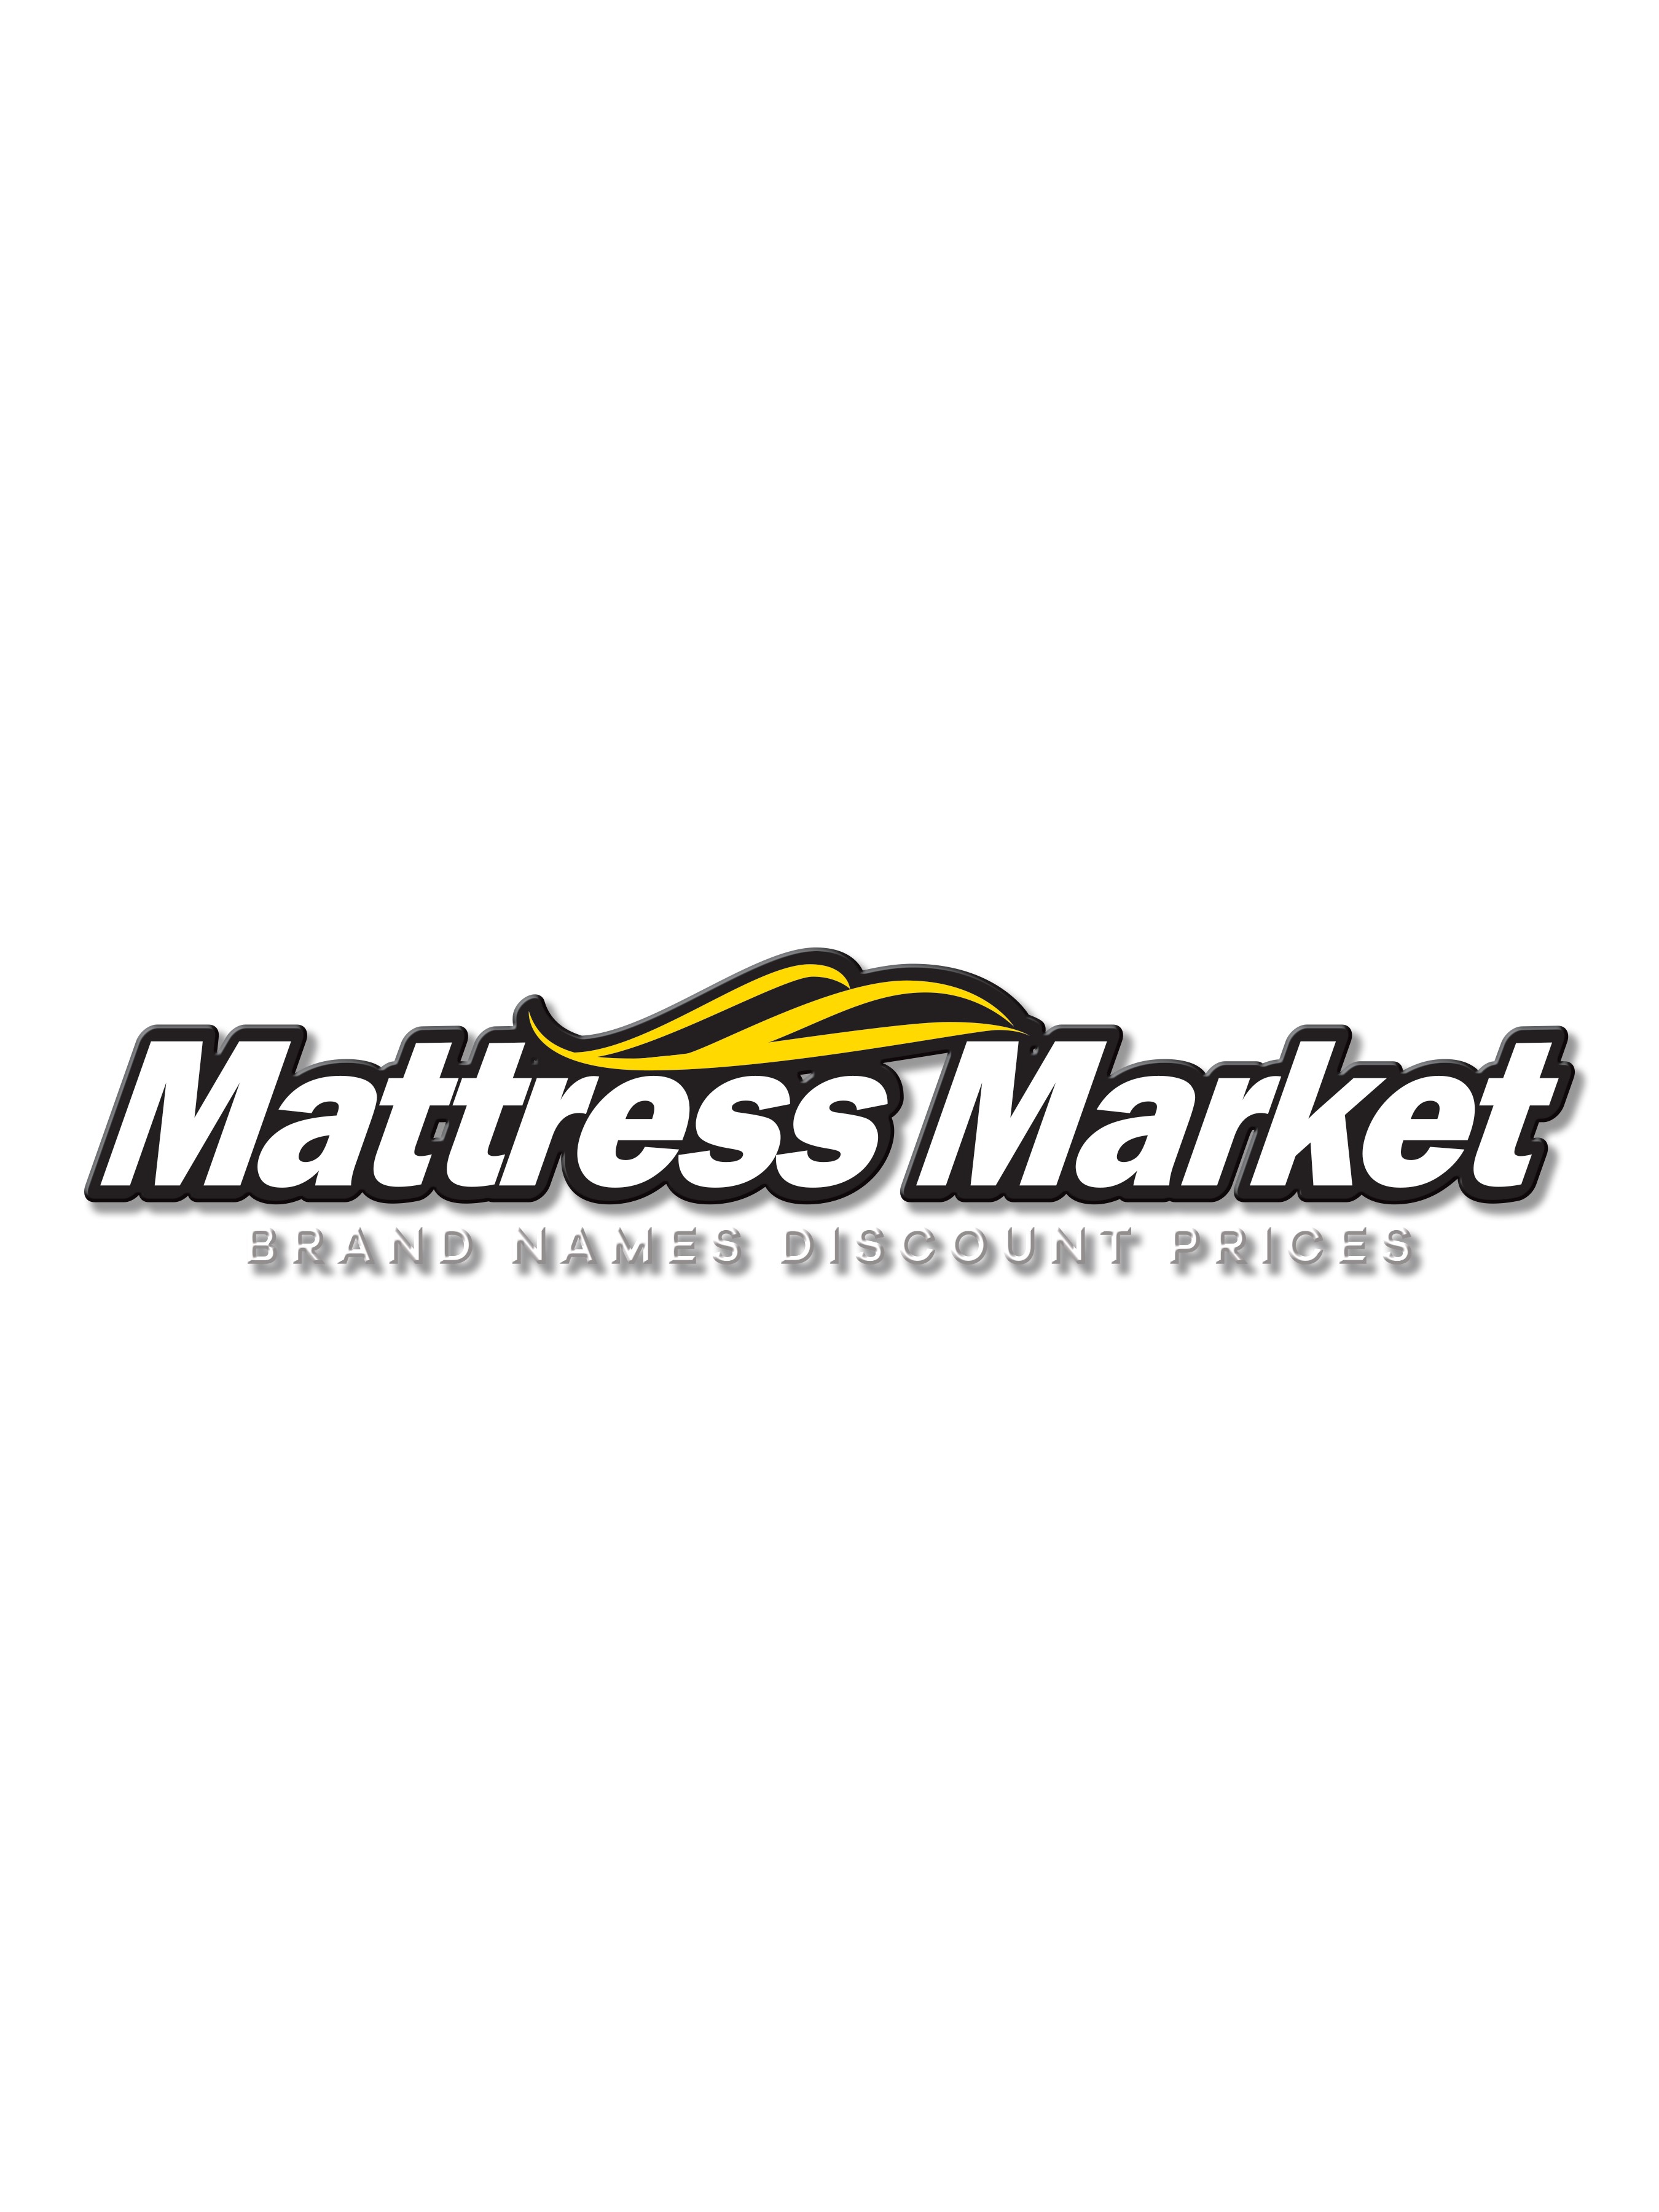 Mattress Market vero beach